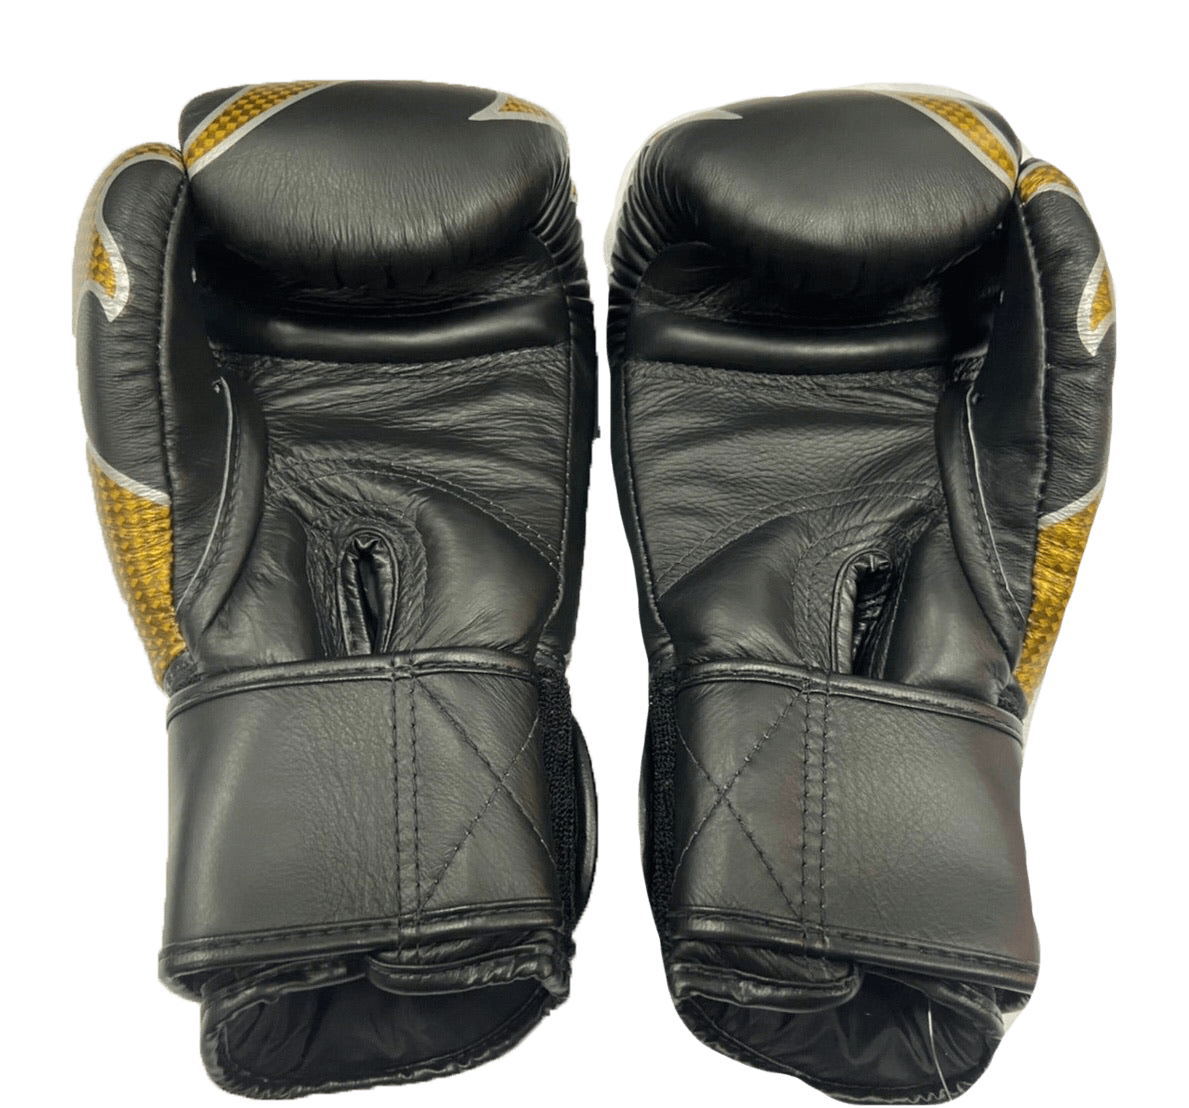 Top King Boxing Gloves "Empower" TKBGEM-01 Black(Gold)No AIR - SUPER EXPORT SHOP